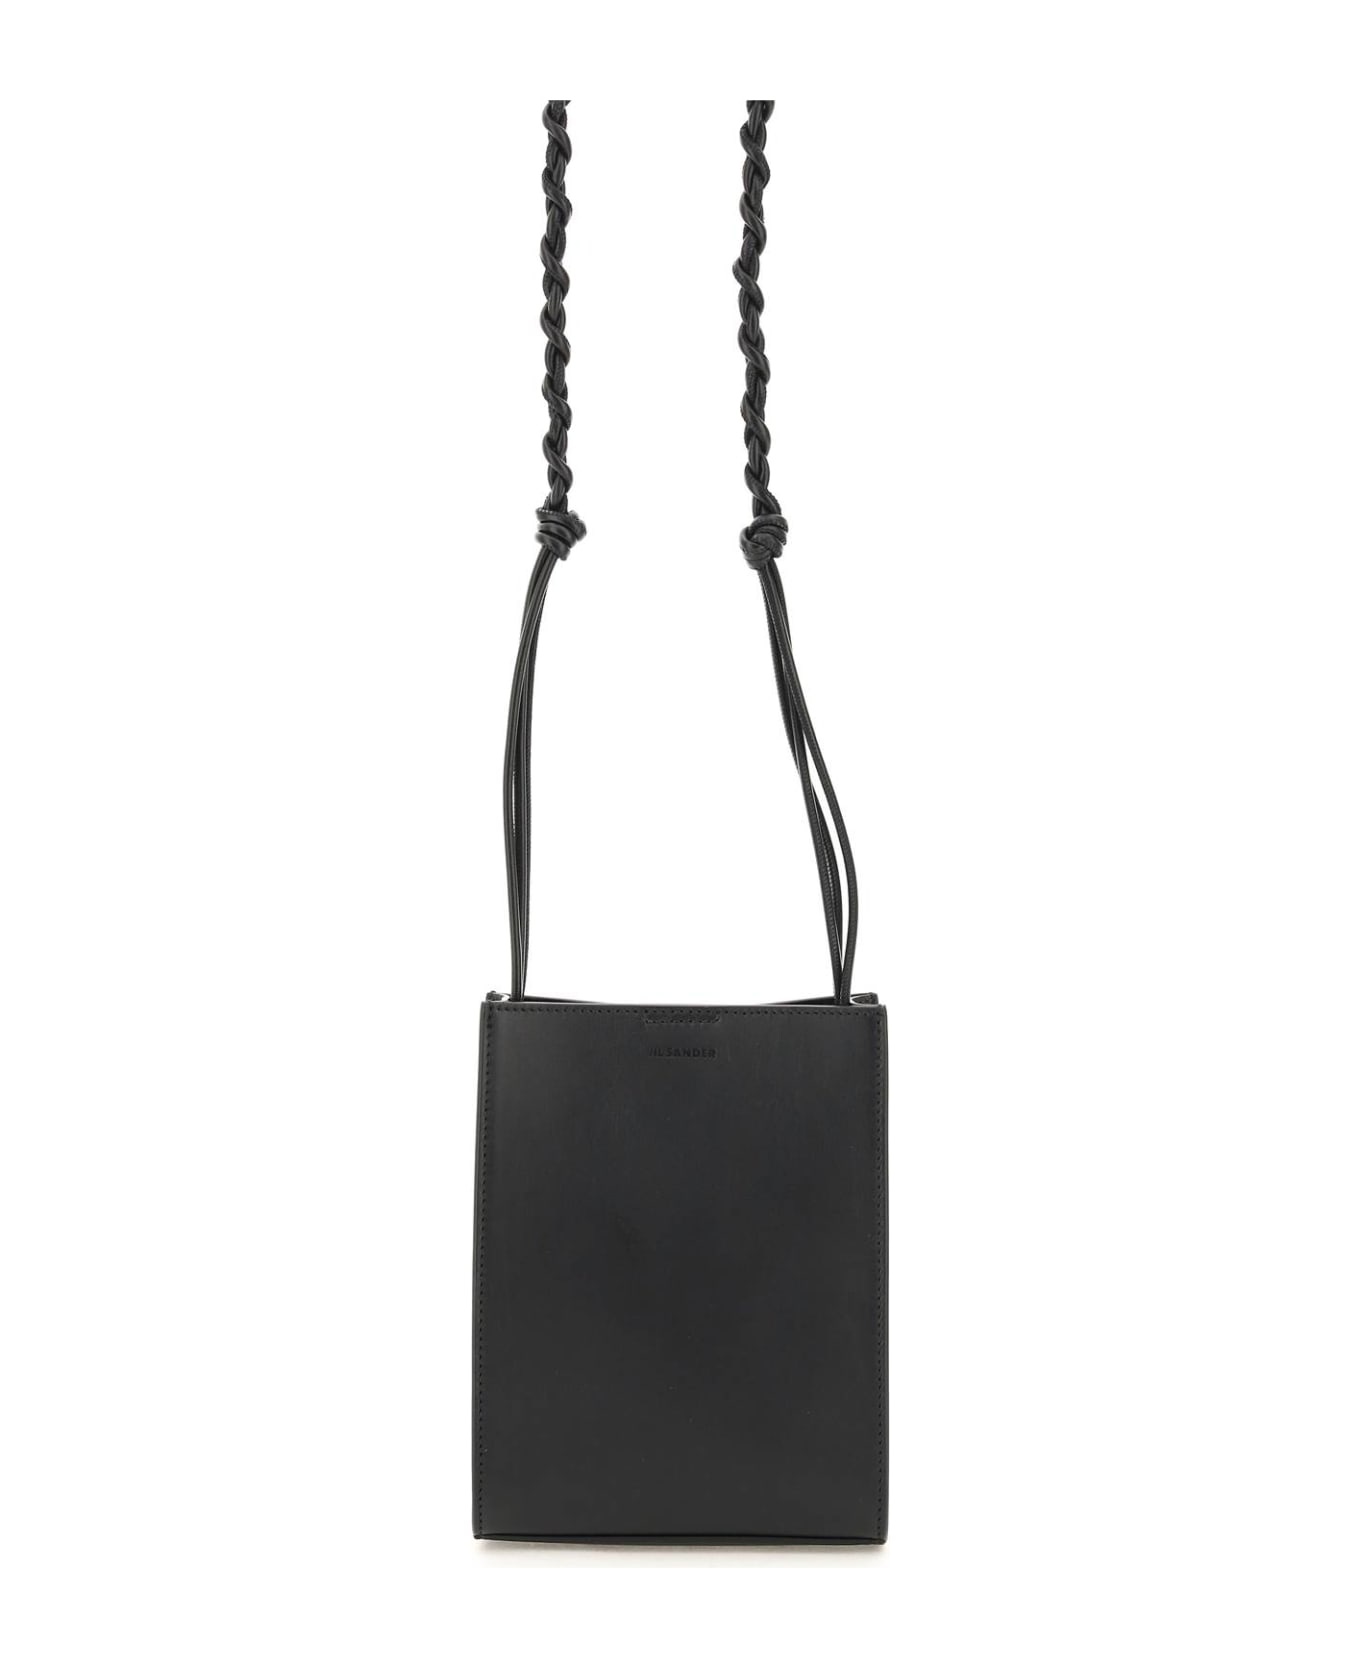 Tangle Crossbody Bag In Black Leather - 1